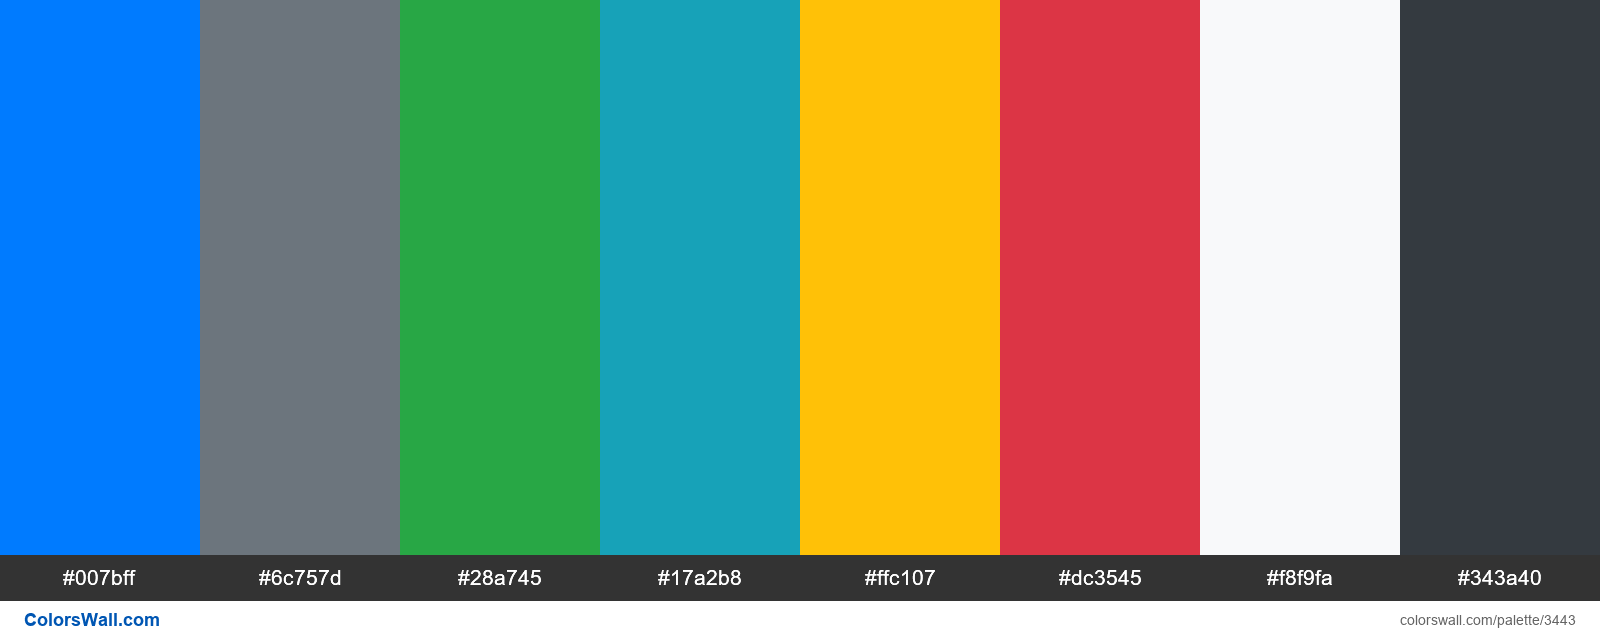 bs4/theme-colors - #3443